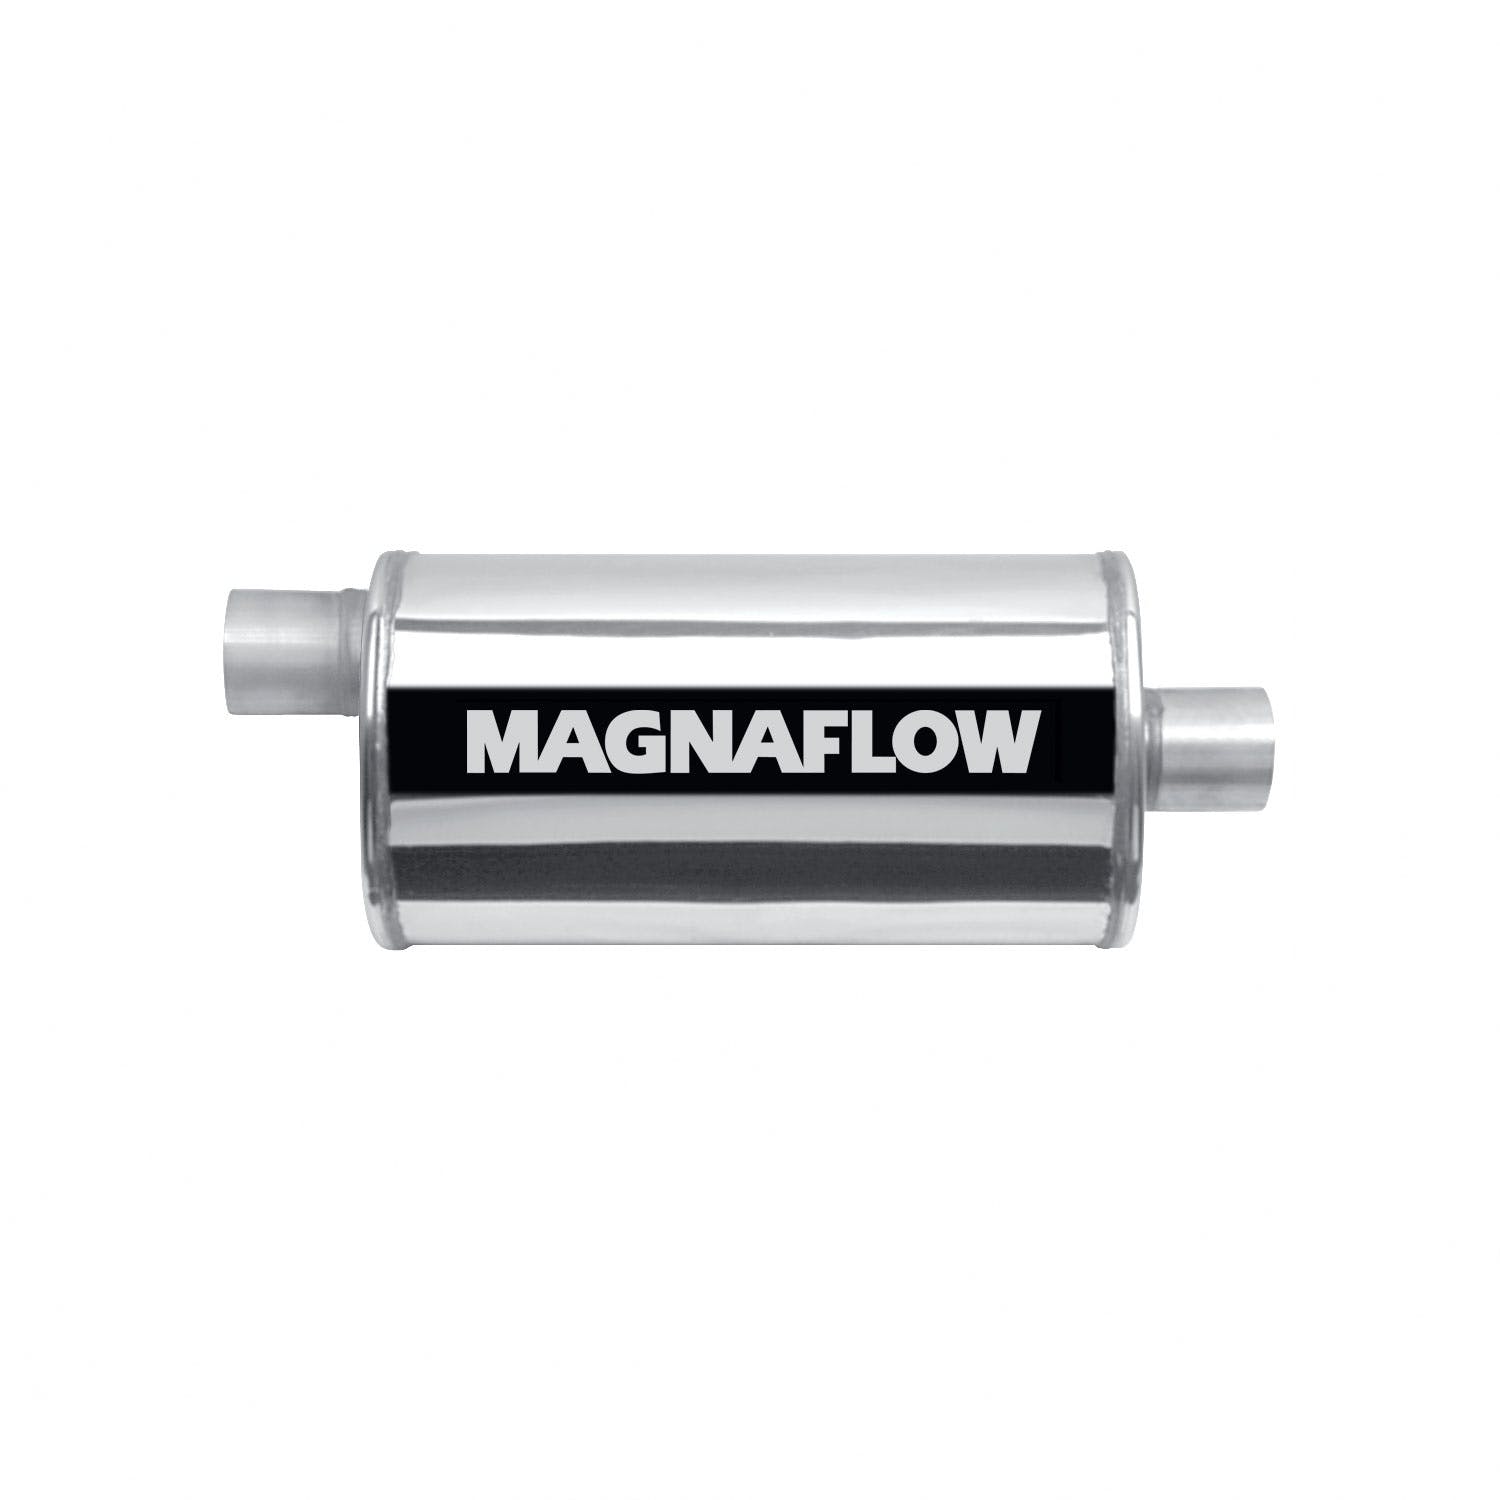 MagnaFlow Exhaust Products 14229 Universal Muffler